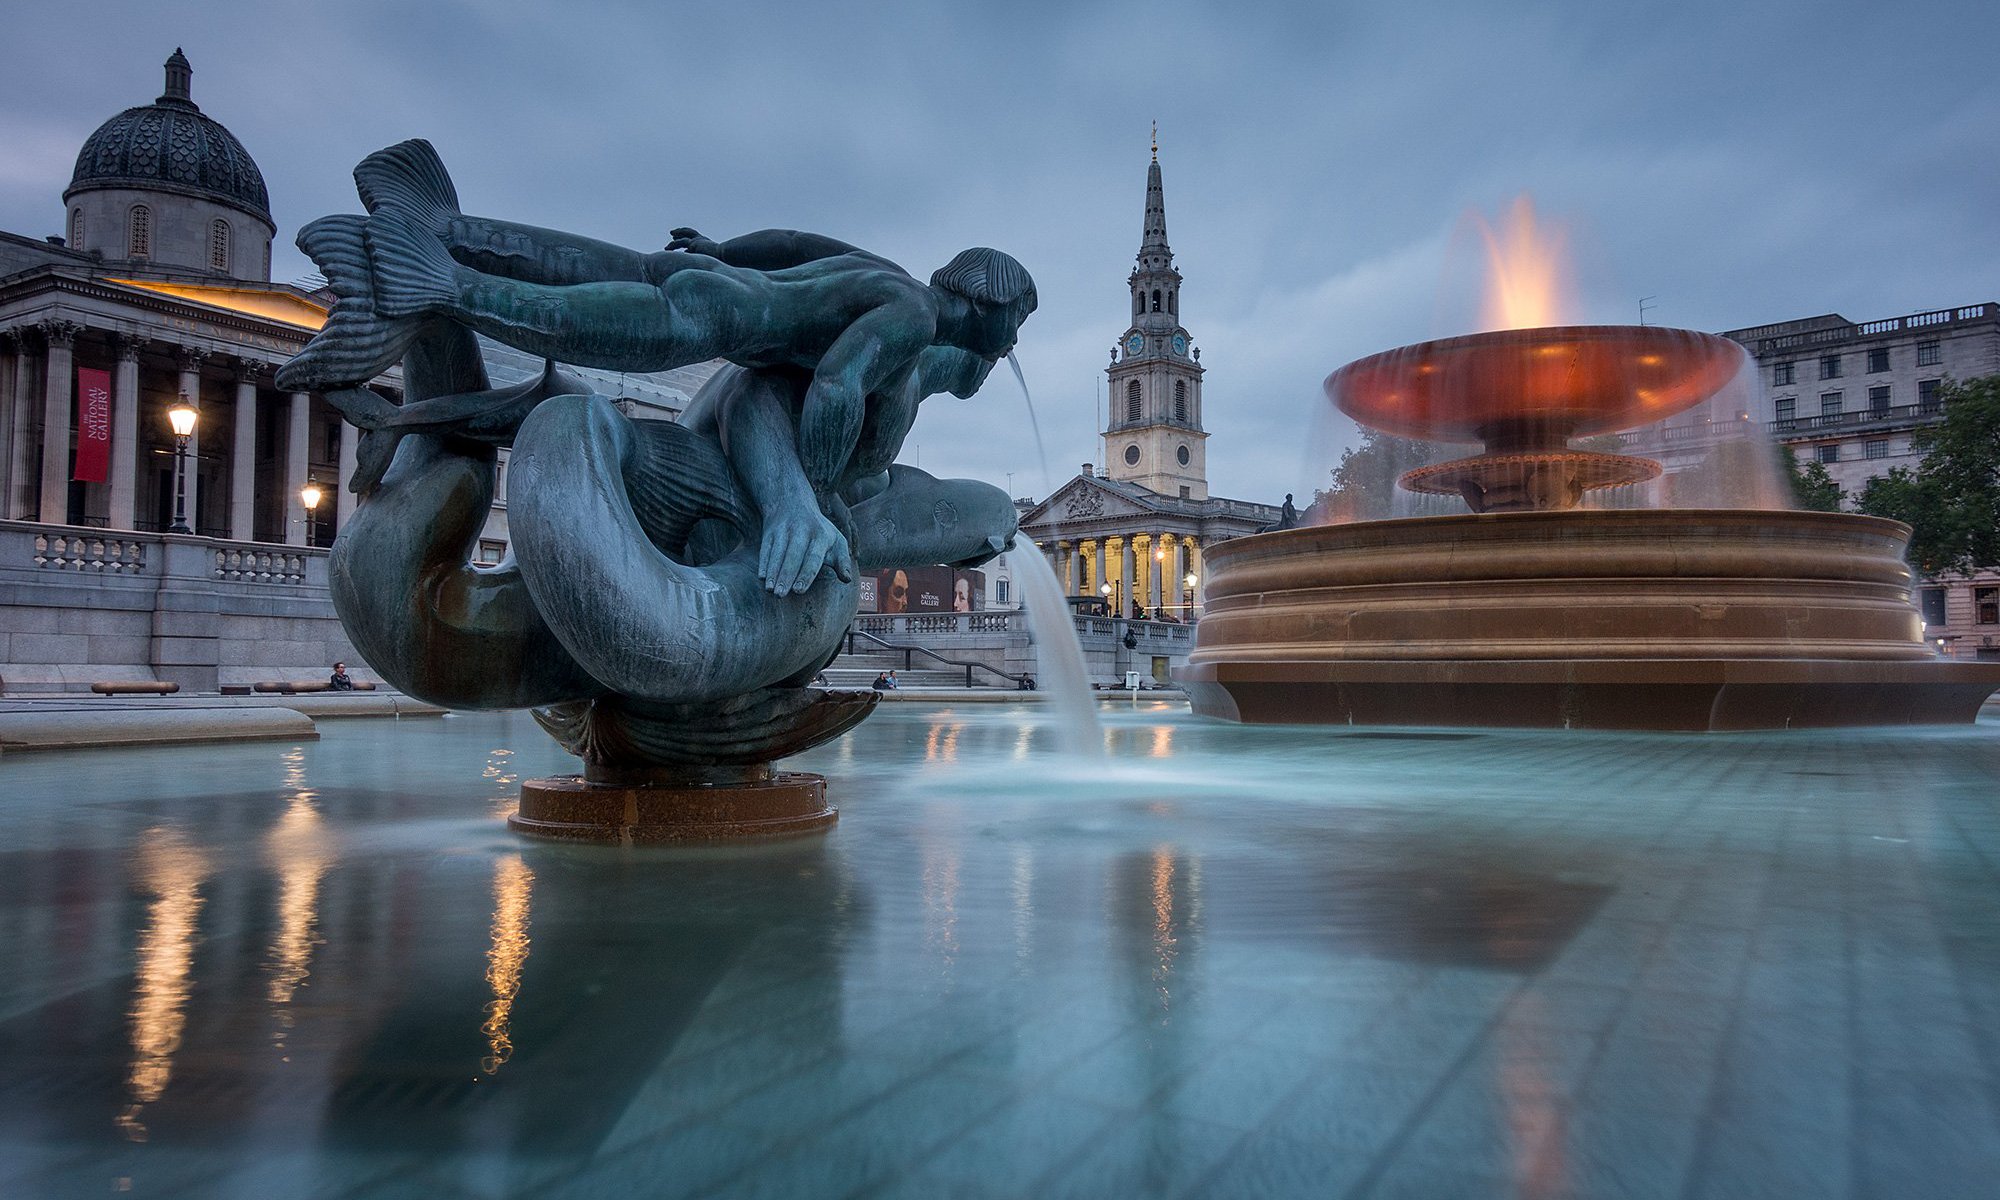 Fountains at Trafalgar Square - Ed O'Keeffe Photography